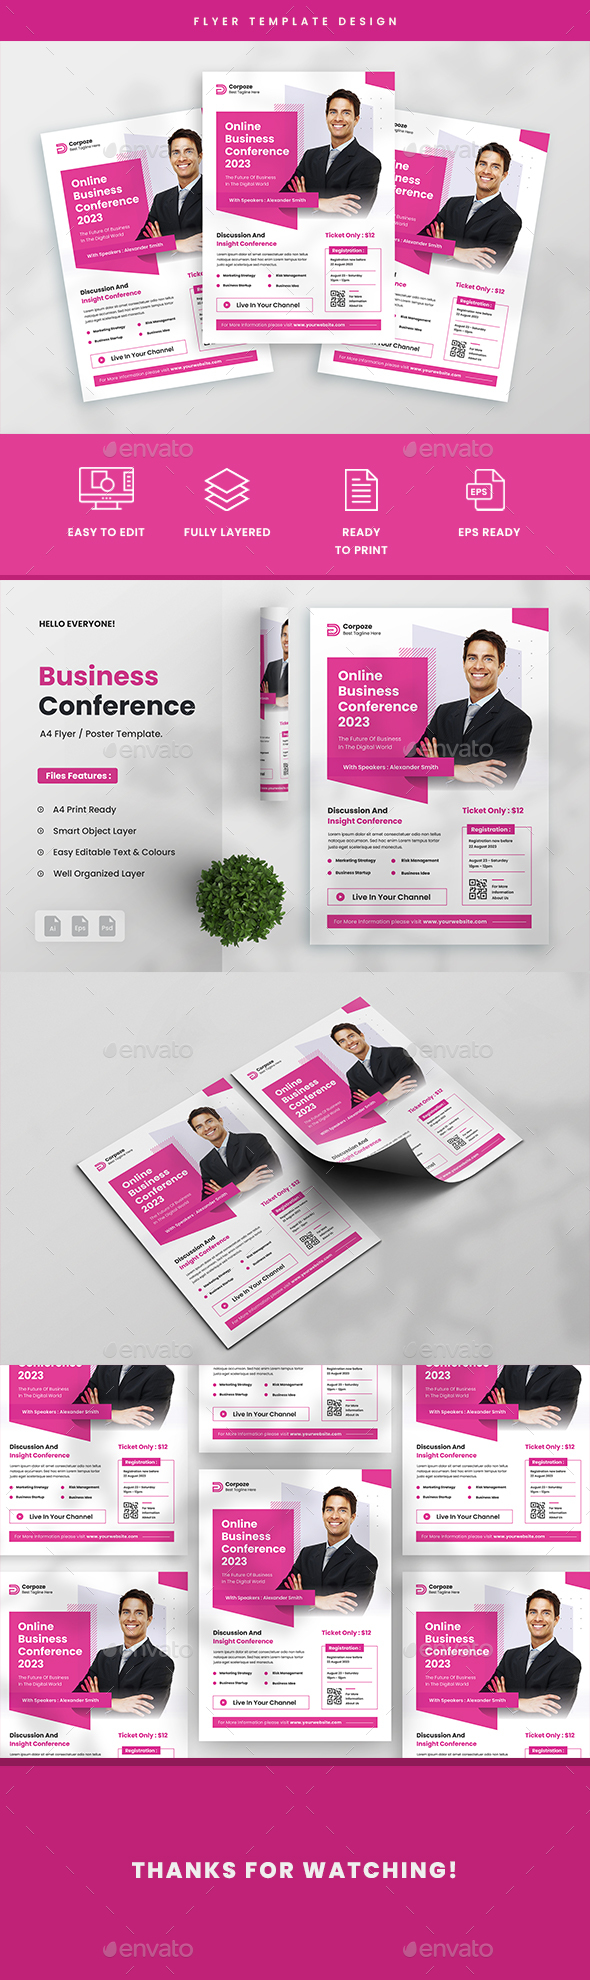 Flyer - Online Business Conference